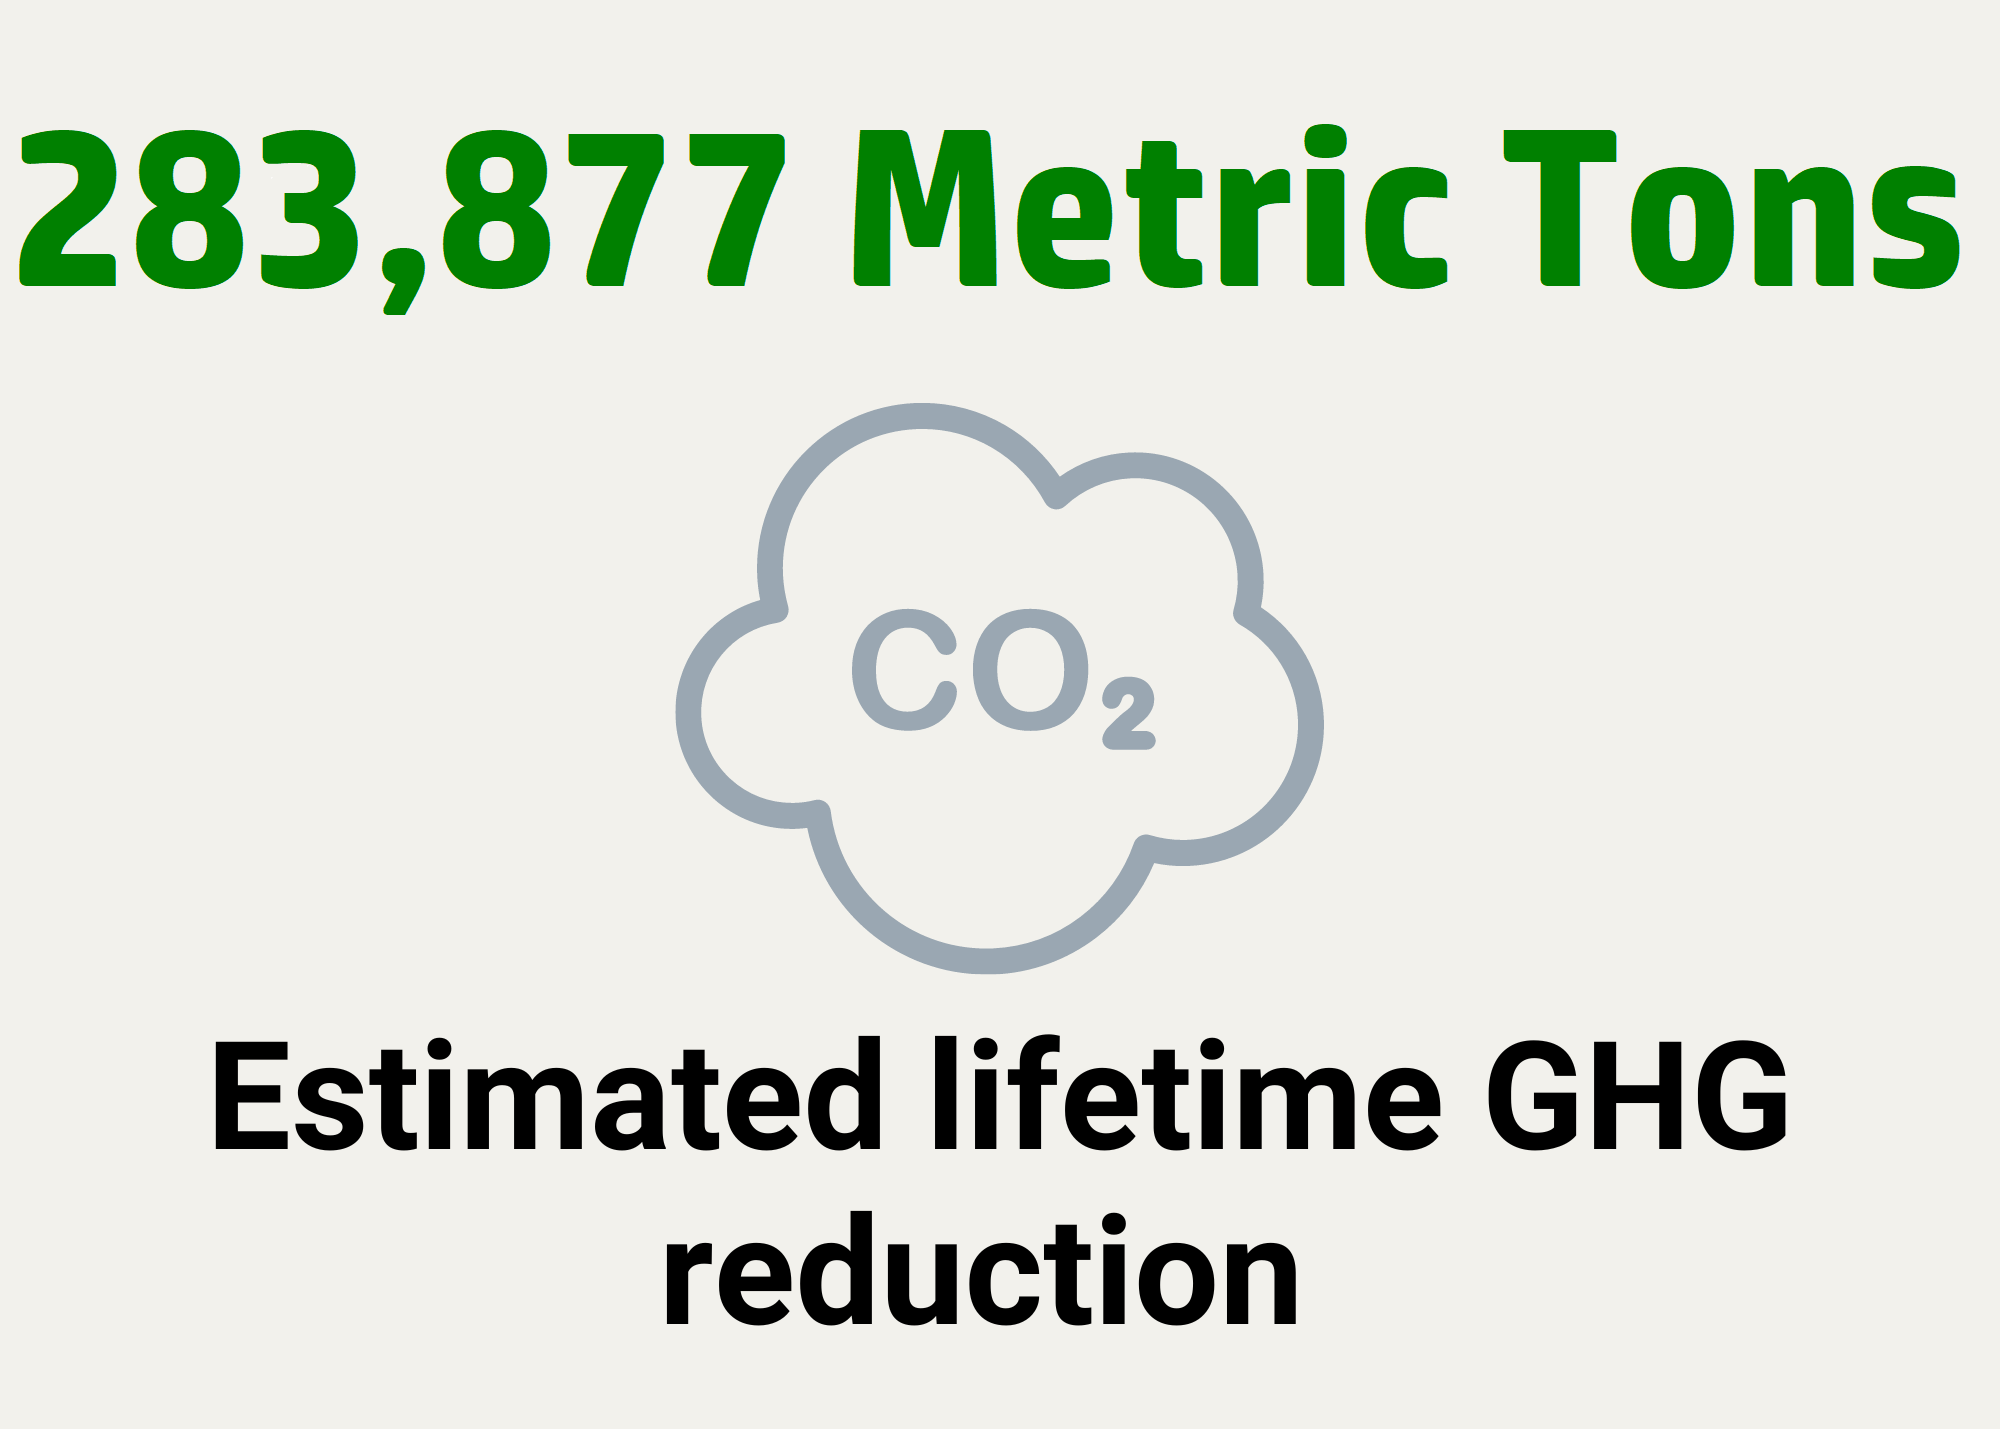 Estimated lifetime GHG reduction: 283,877 metric tons